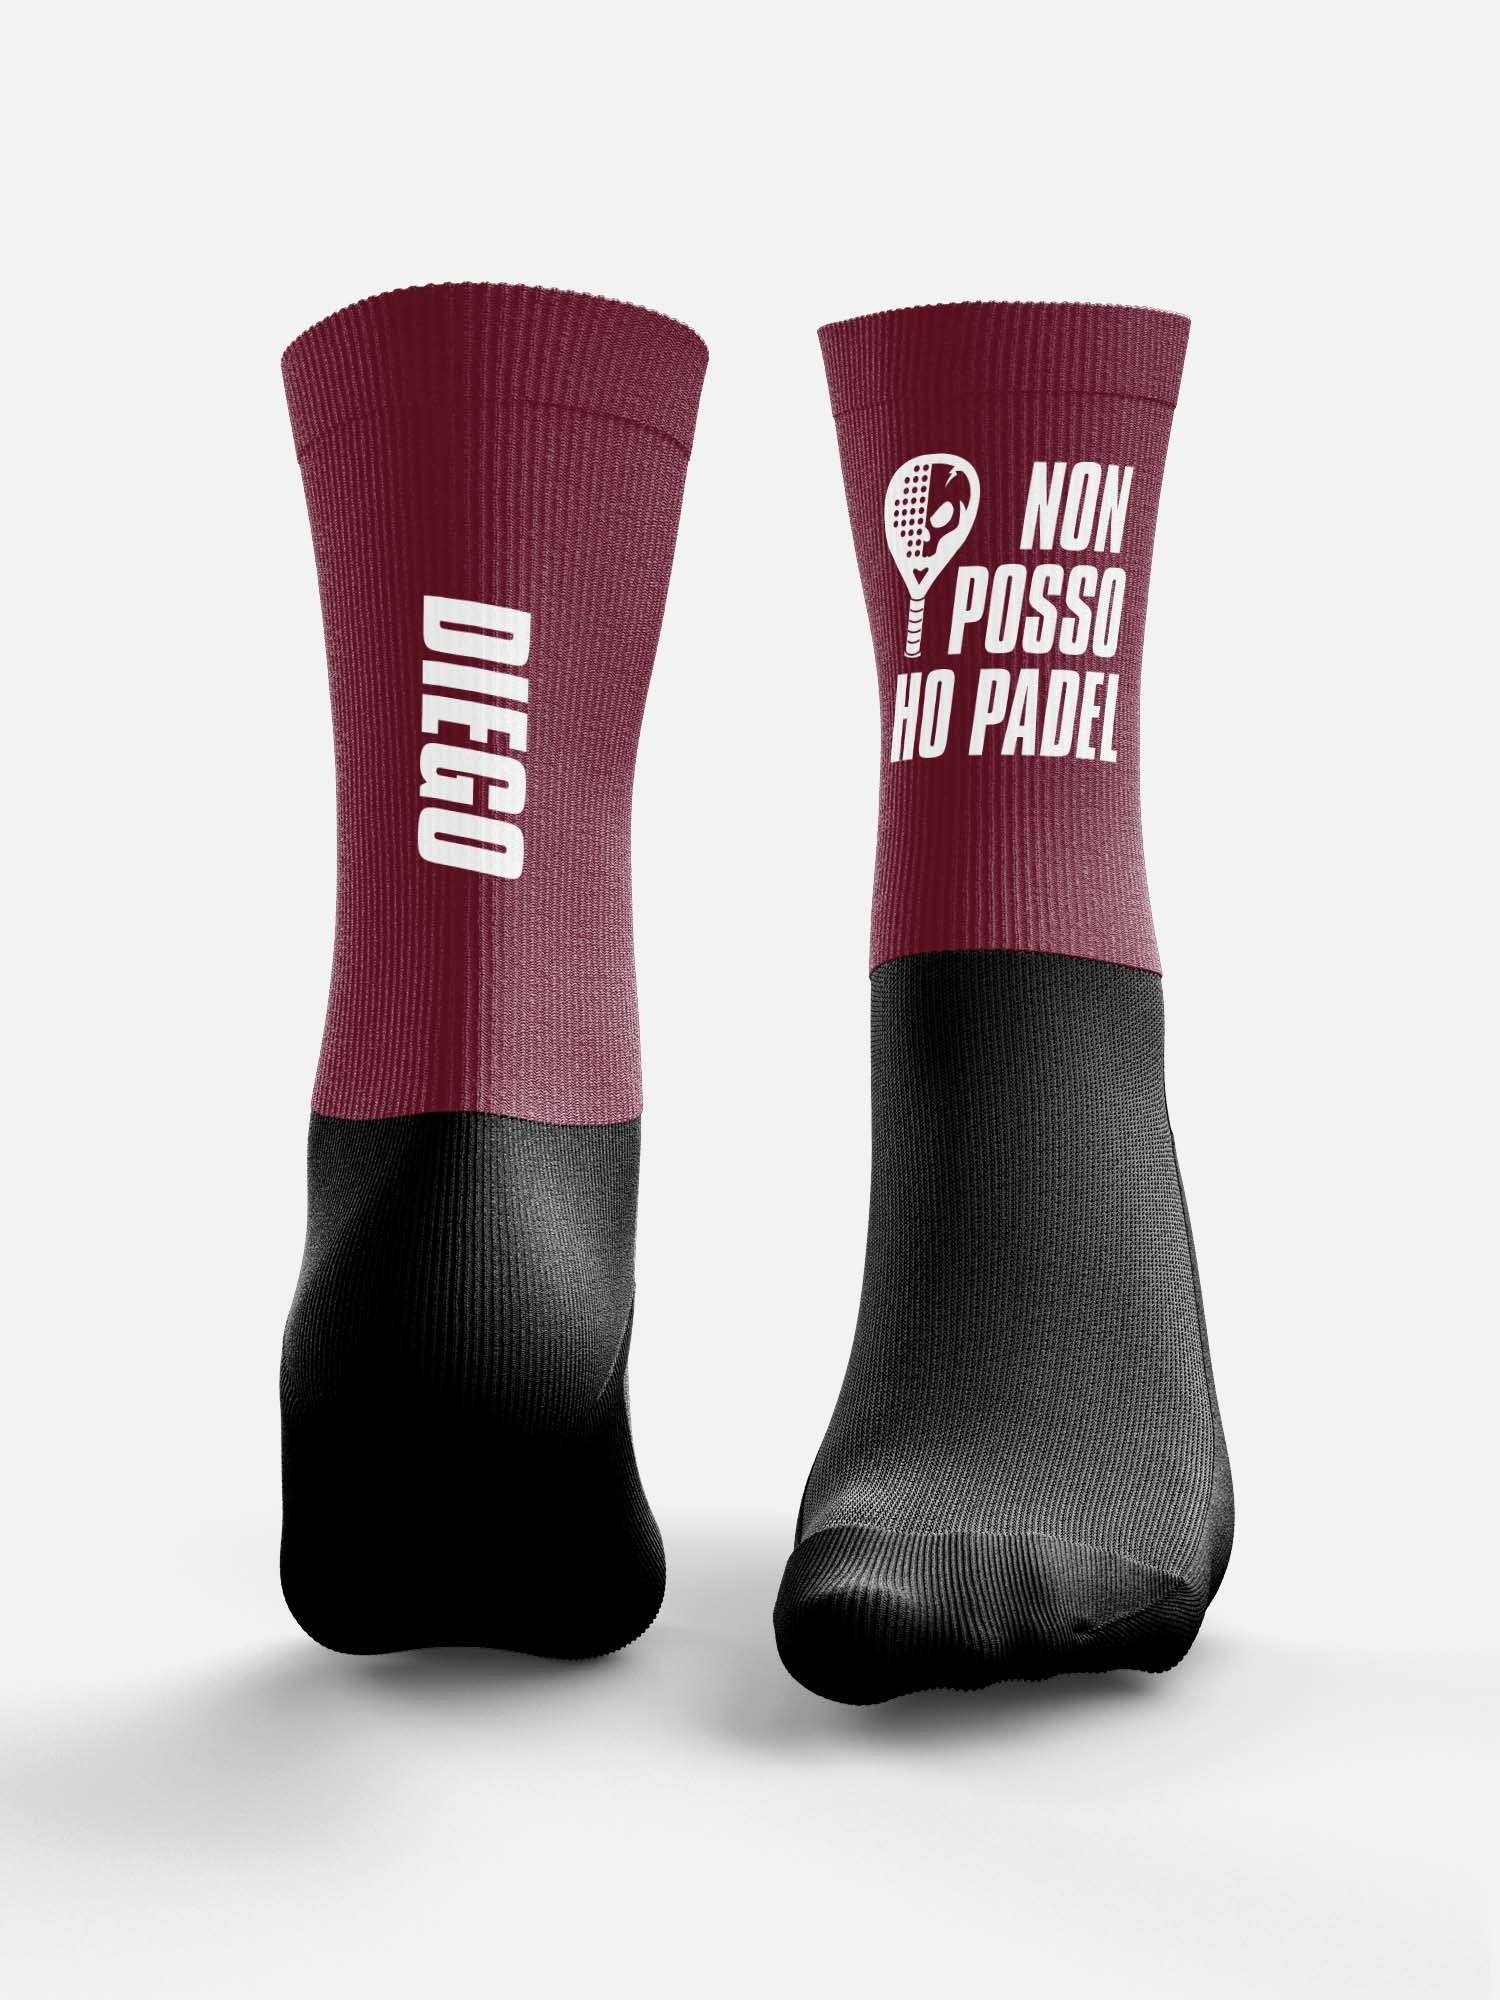 Padel Fun Socks - I Can't Ho Padel